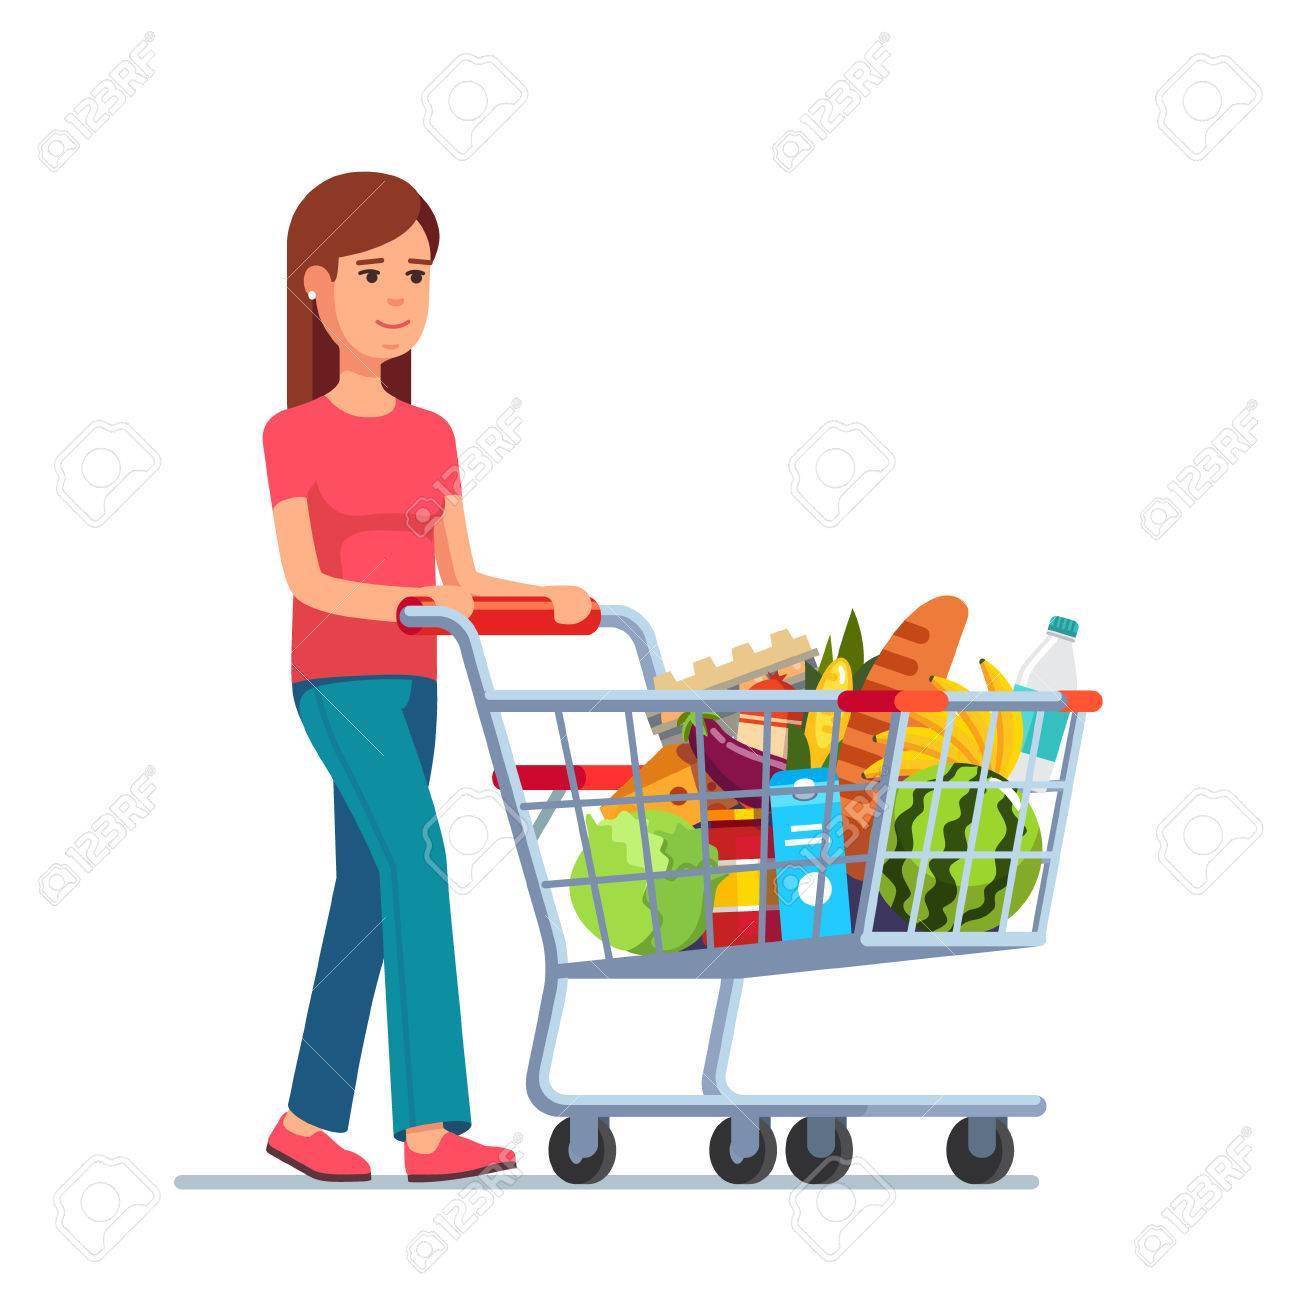 Young woman pushing supermarket shopping cart